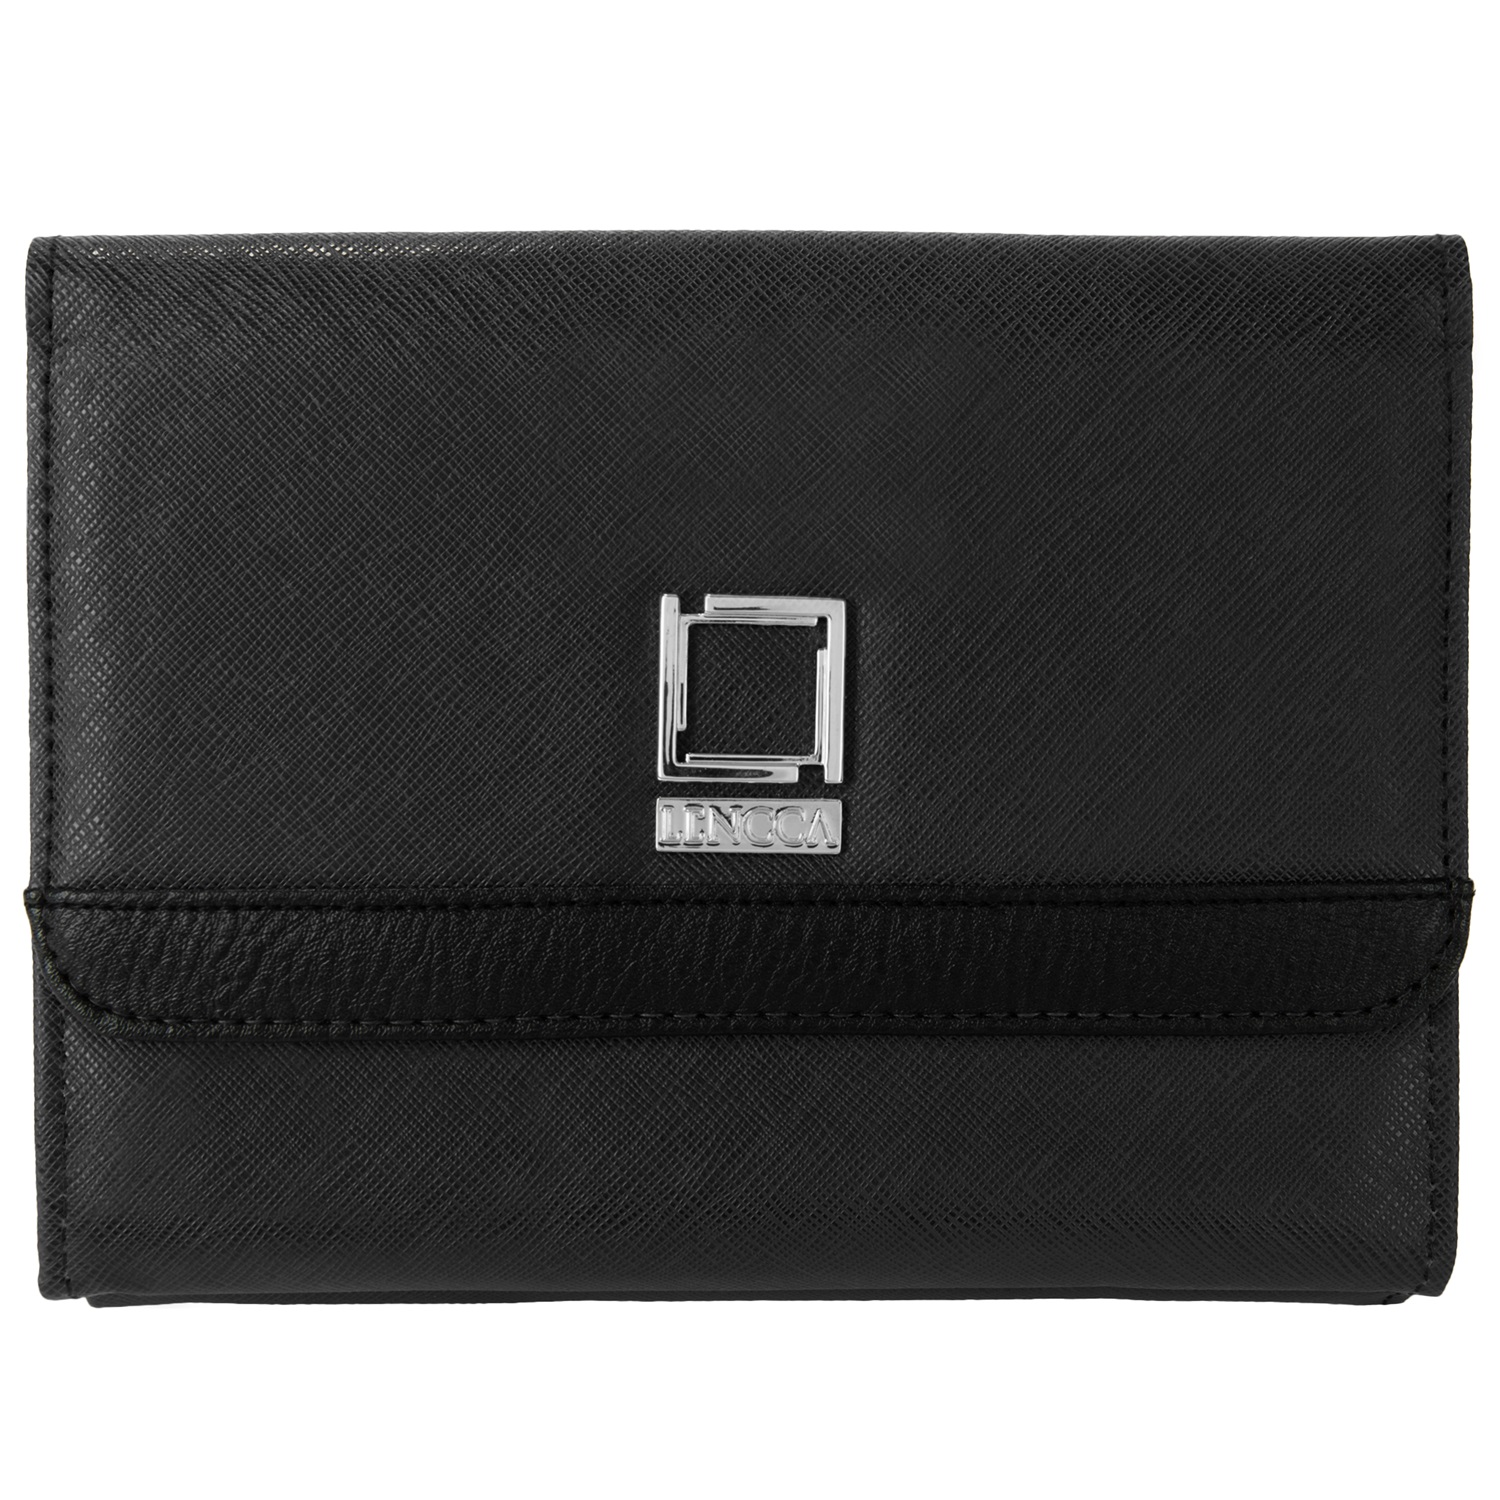 Lencca Nikina Woman’s Clutch Crossbody Fashion Handbag w/ Shoulder Strap fits MSI Tablets up to 7.9in x 5.25in